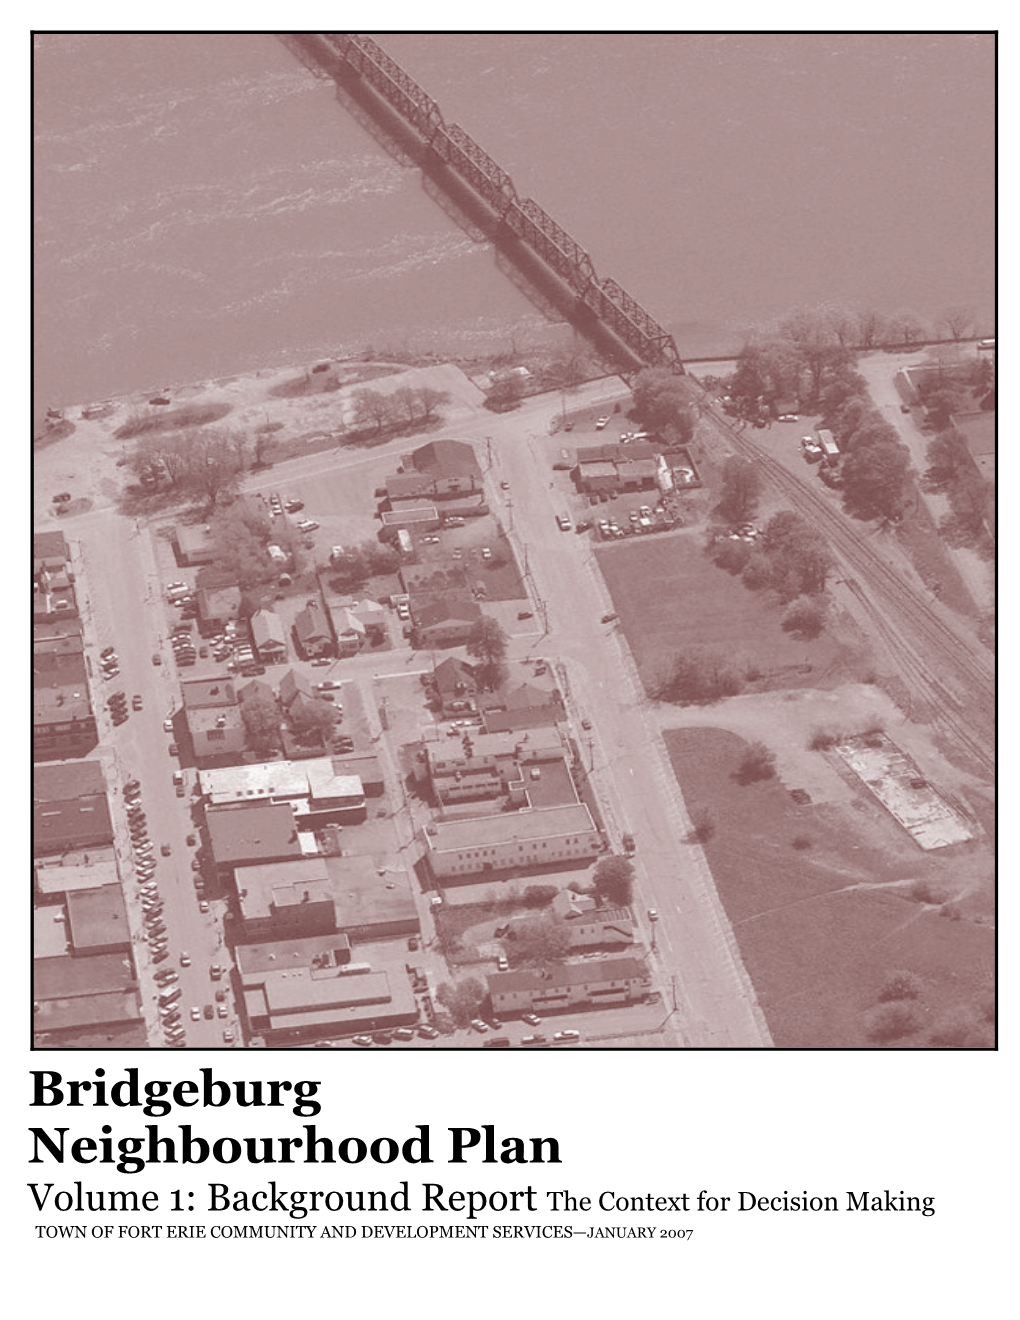 Bridgeburg Neighbourhood Plan Volume 1 – Background Report